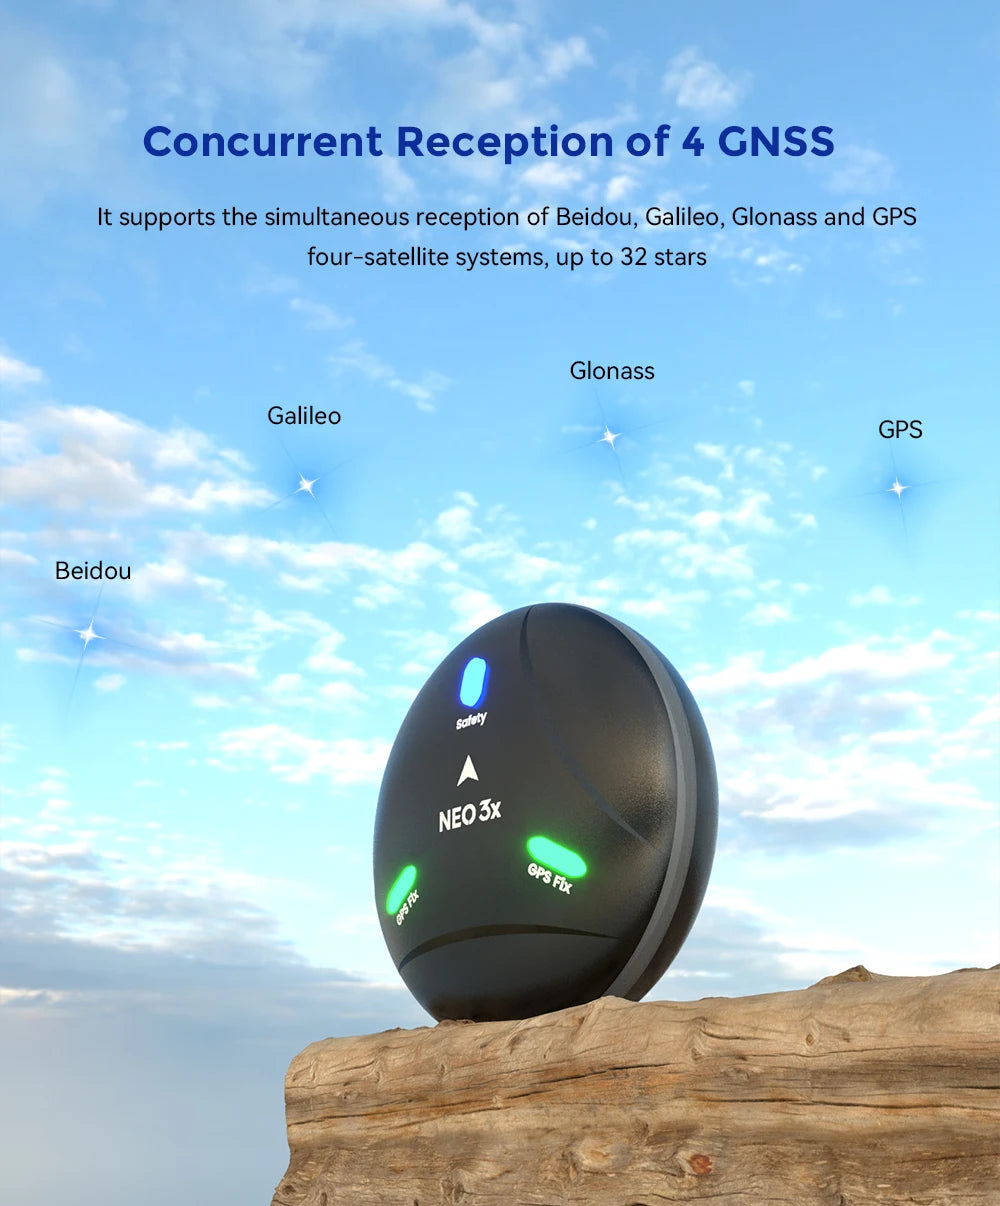 CUAV New NEO 3X GPS, CPSFb supports the simultaneous reception of Beidou; Galileo, Glon